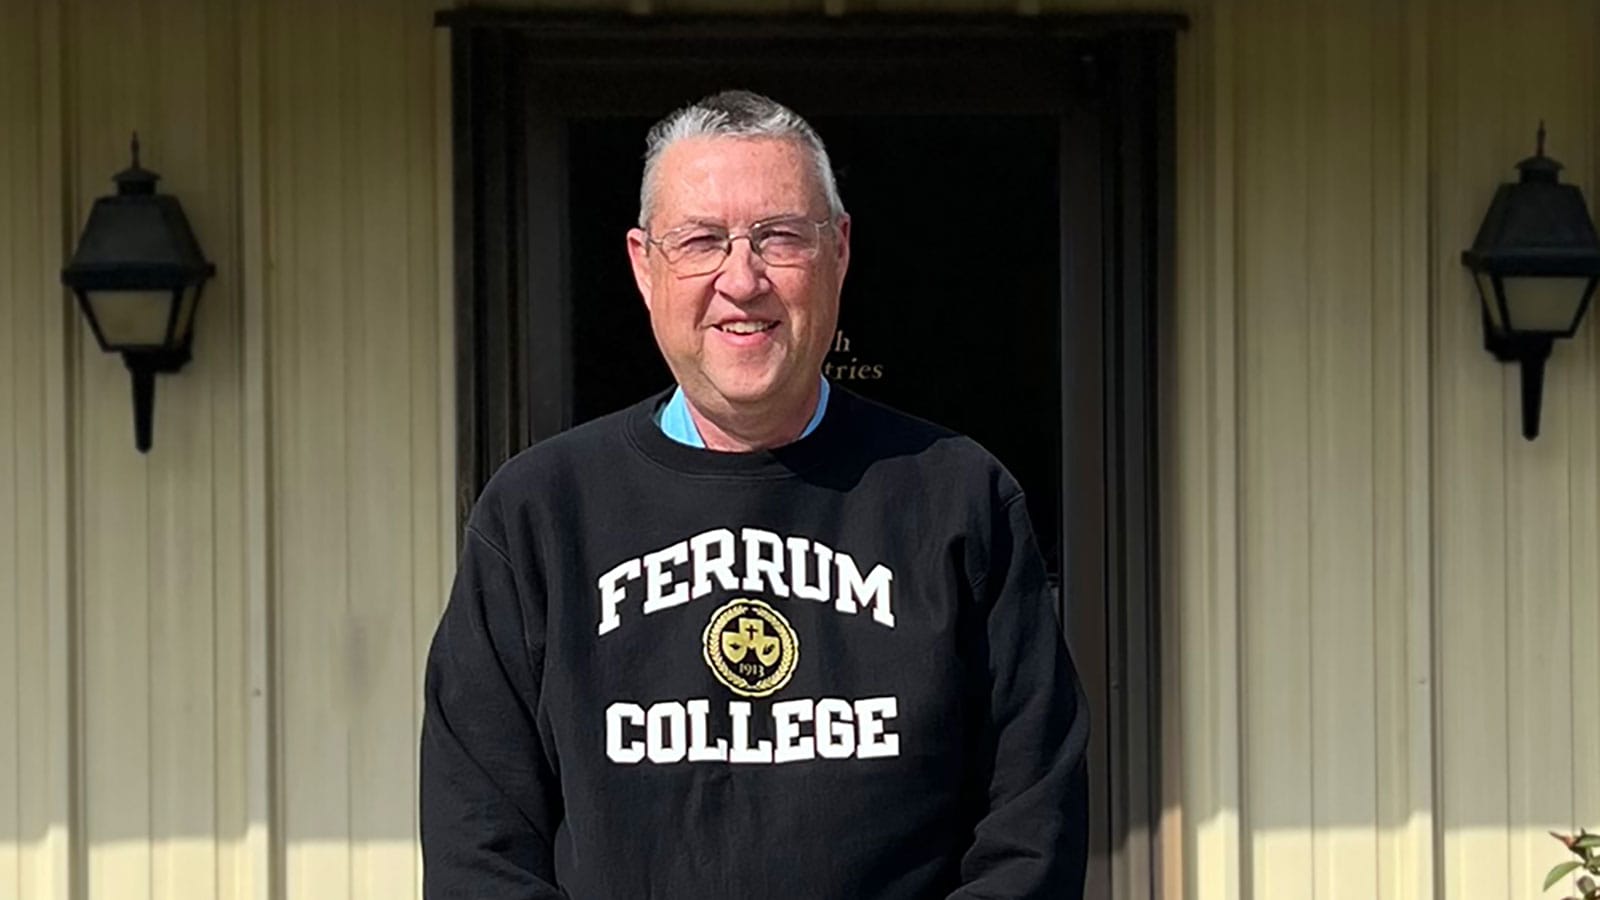 Ferrum College Arthur Society member Gary Ingram